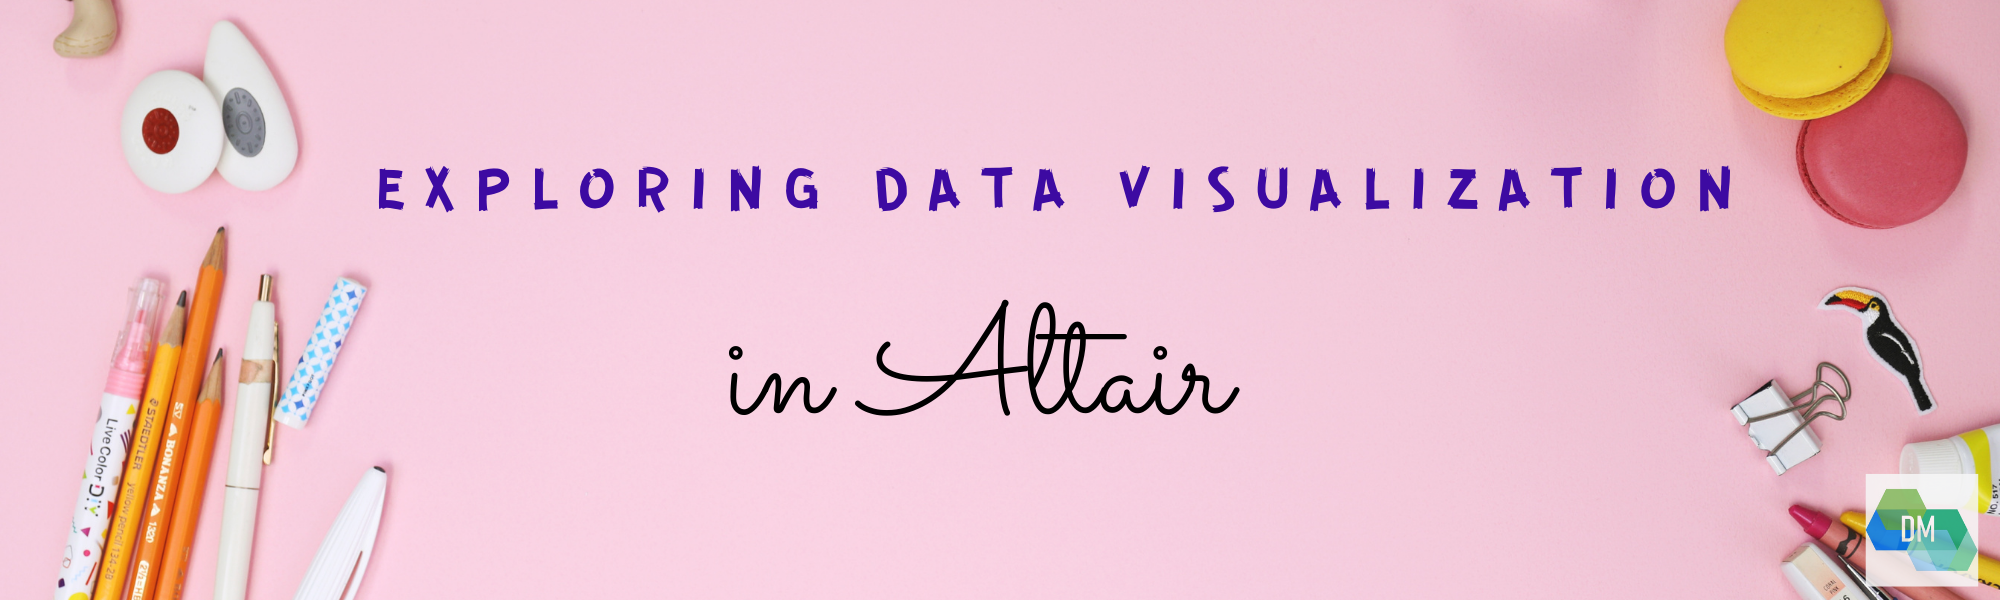 Exploring Data Visualization in Altair